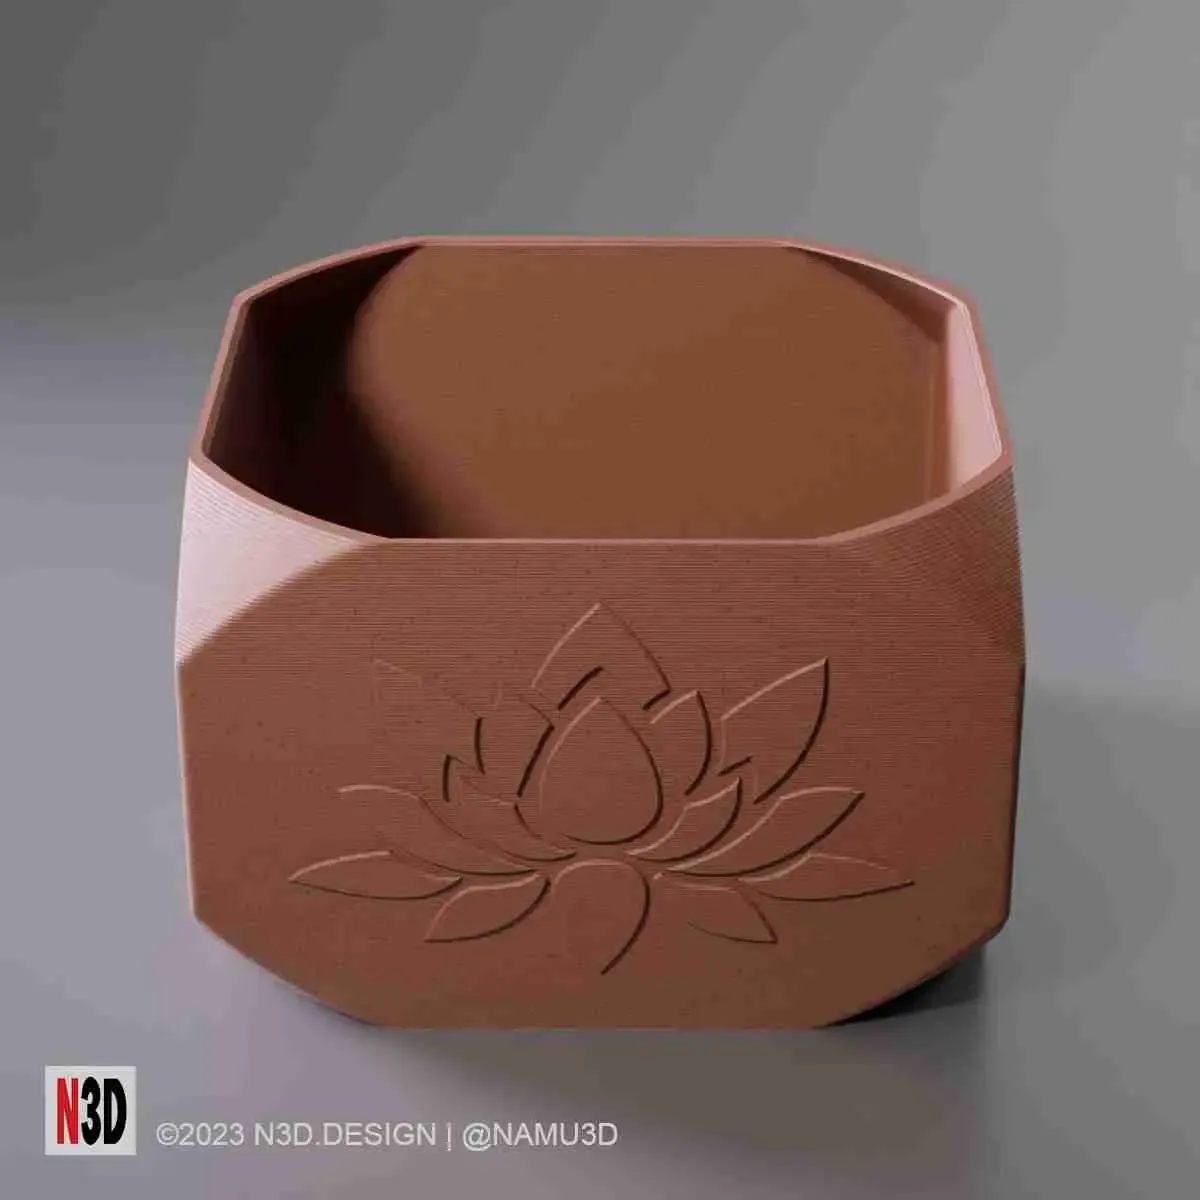 Vase 0009 - Lotus planter vase